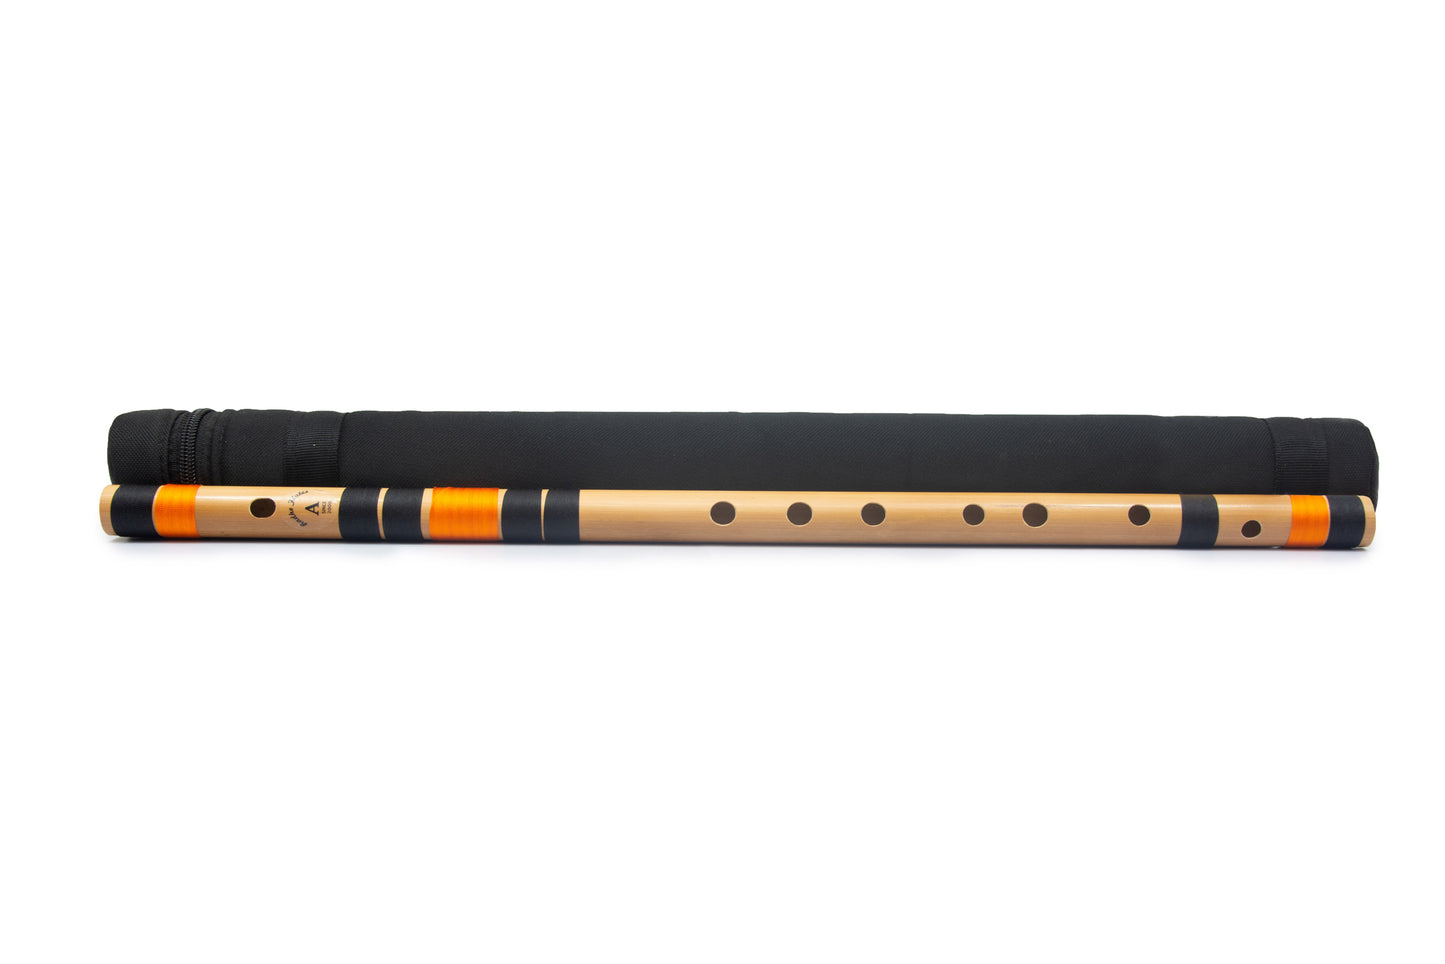 Radhe Flutes Bamboo A Natural Bansuri Base Octave with Hard Cover 23"inches